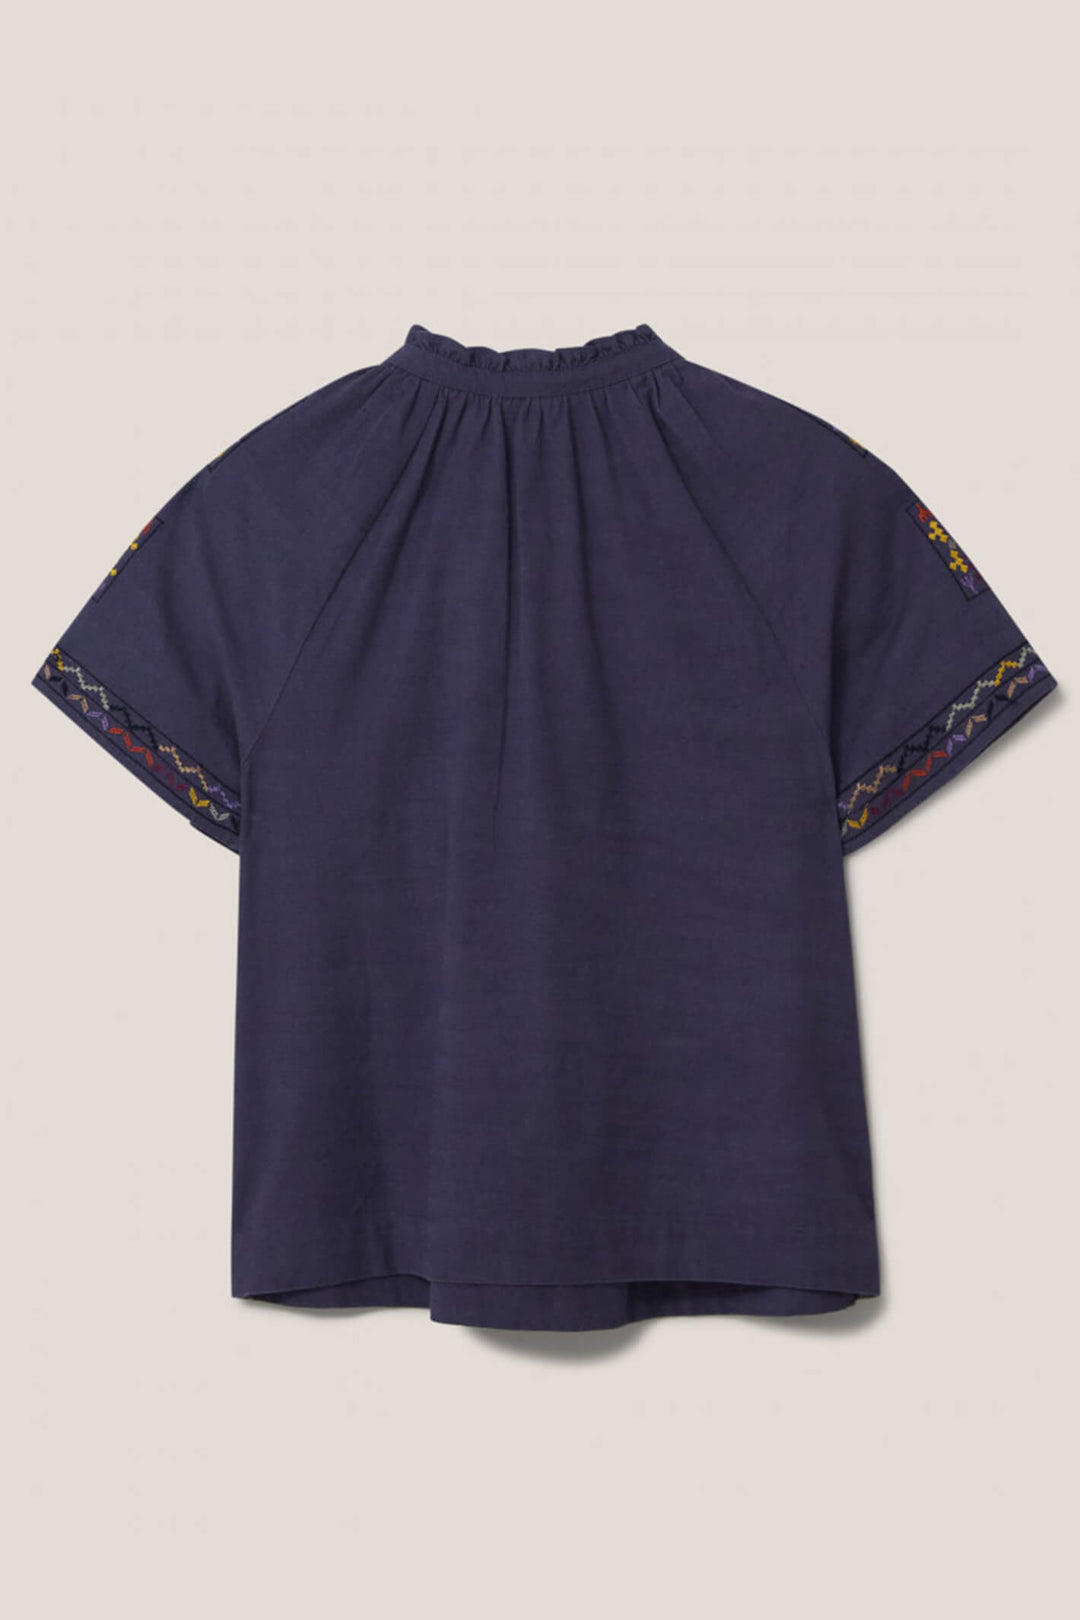 White Stuff 438691 Frida Purple Embroidered Blouse - Shirley Allum Boutique